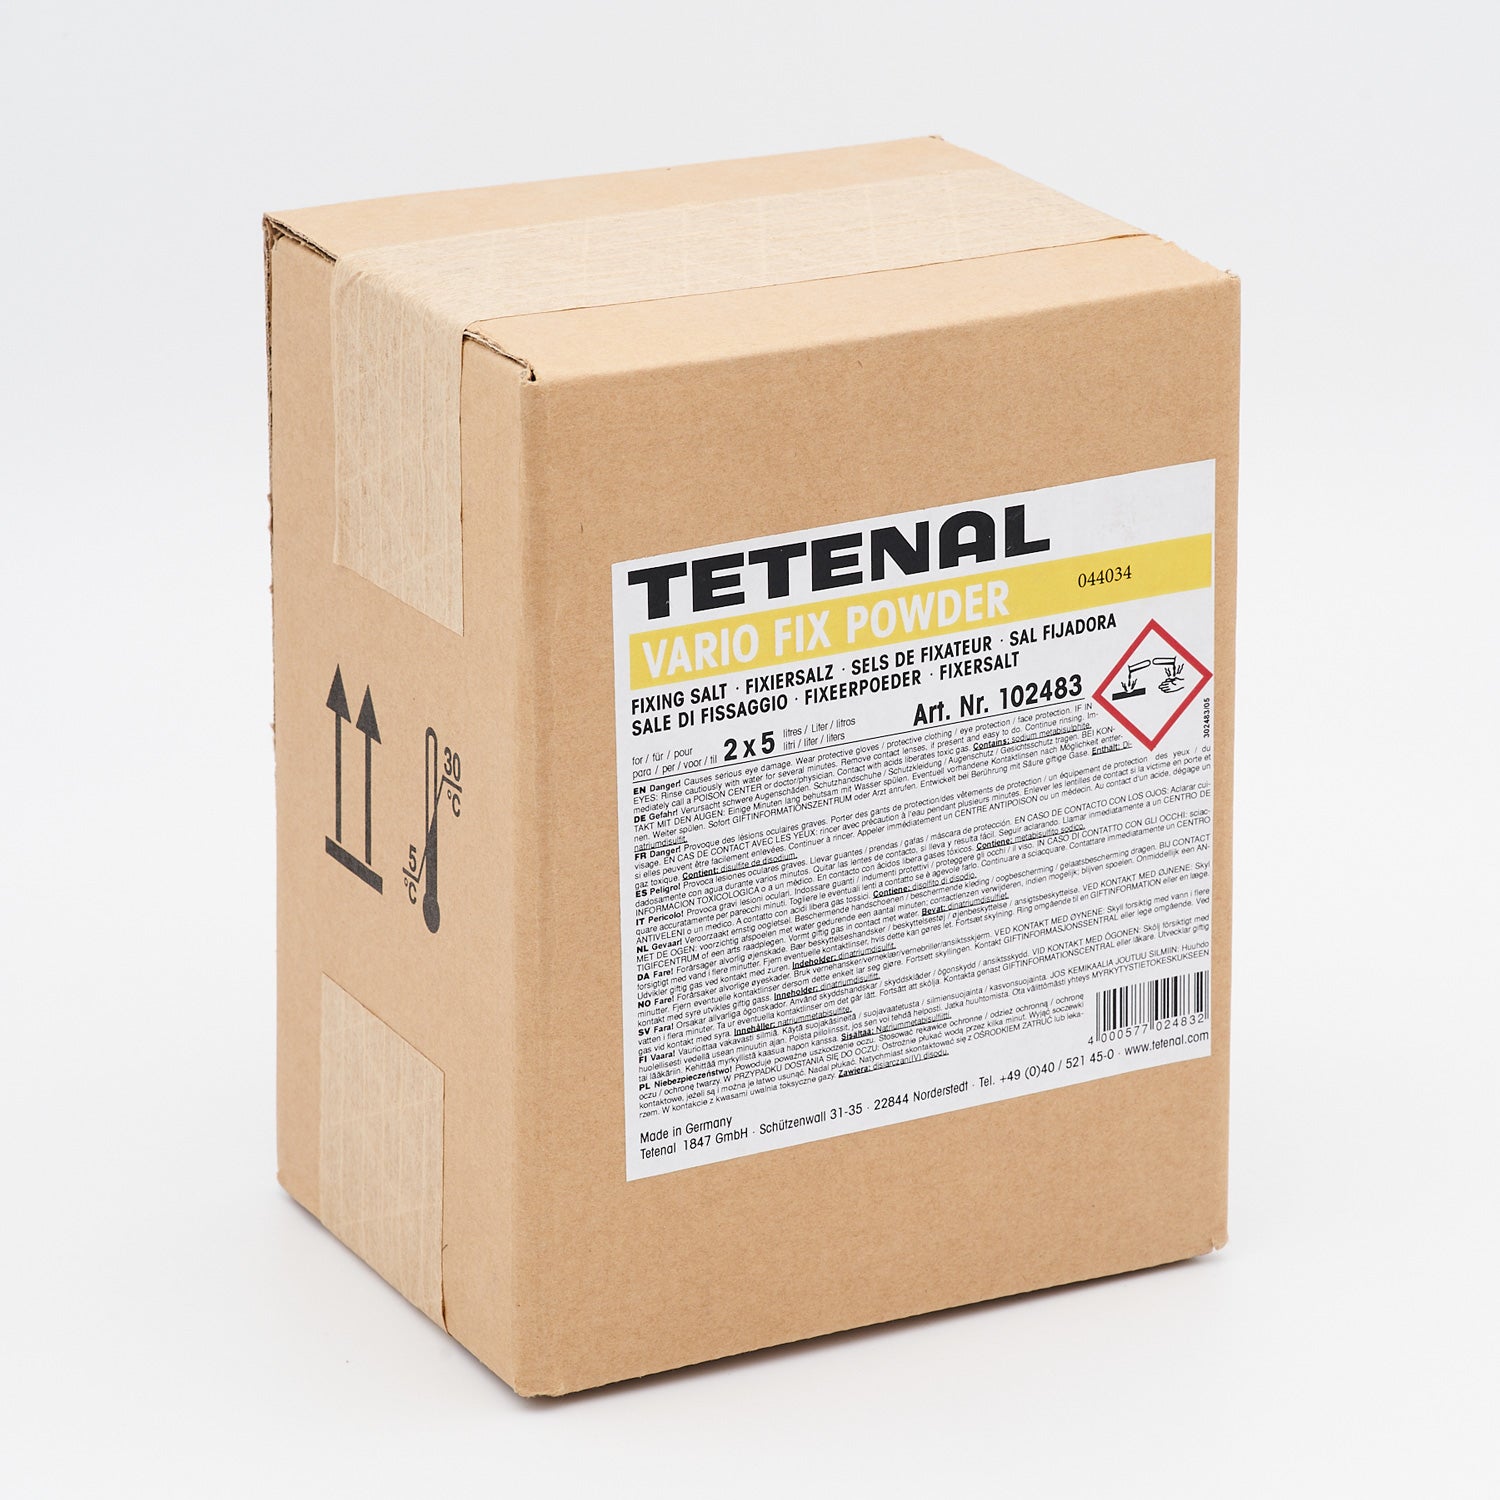 TETENAL Vario Fix Powder 2x (500g)